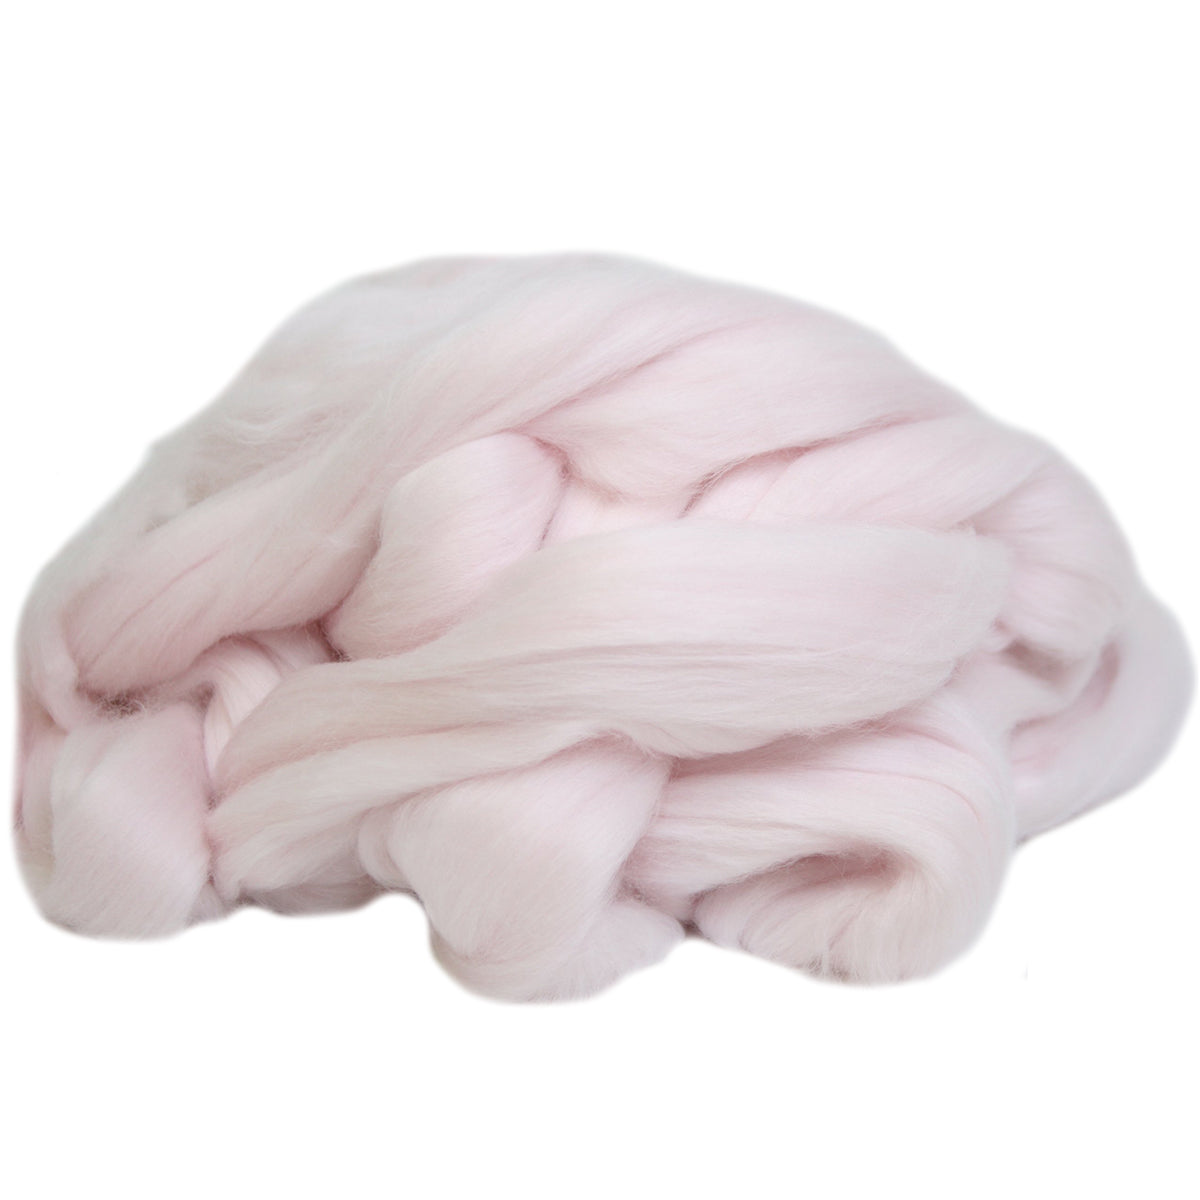 Merino Wool Top Pink Lace 2950g